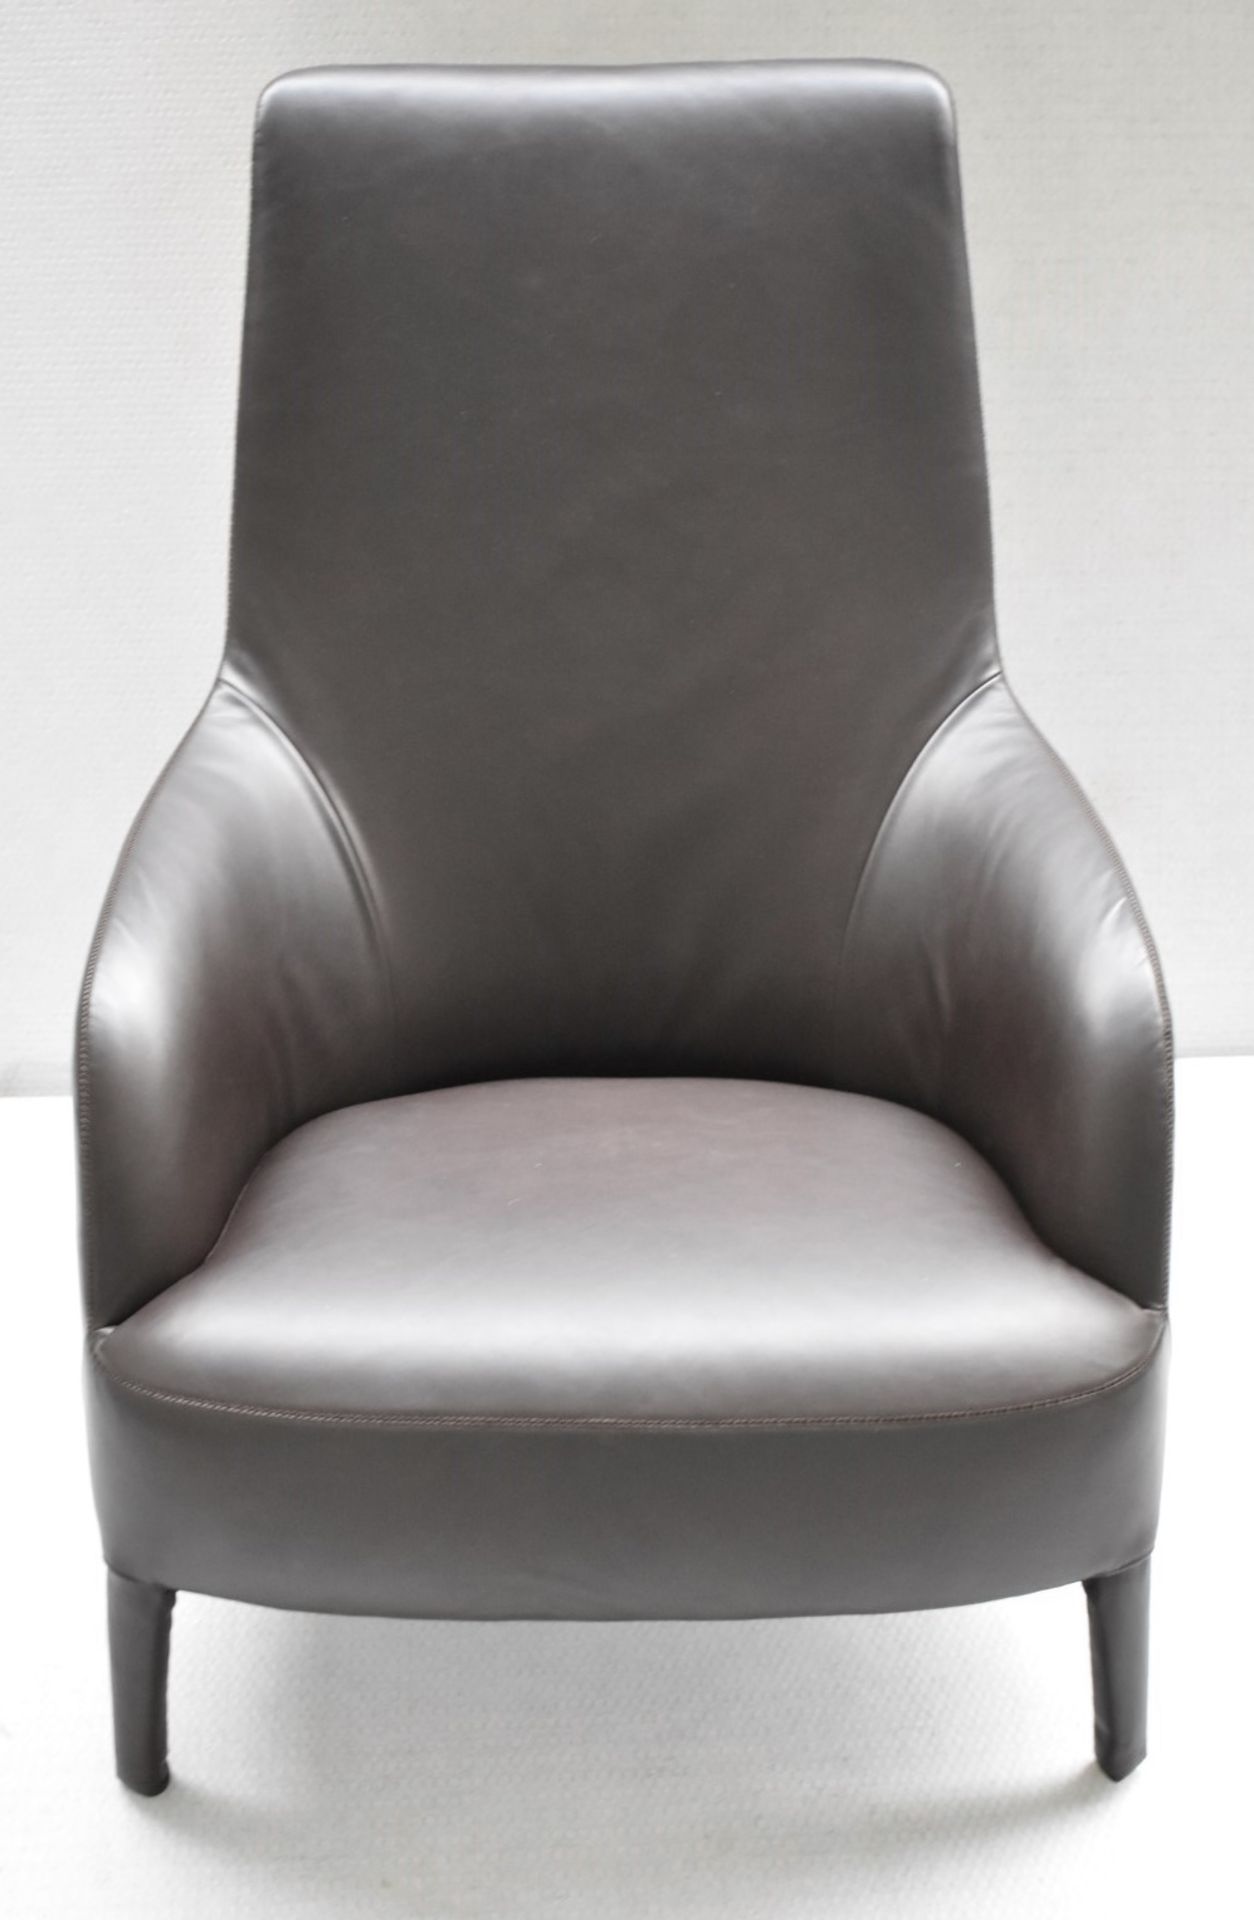 1 x B&B ITALIA / MAXALTO 'Febo Bergère' Leather Armchair - RRP £5,800 - Image 2 of 7